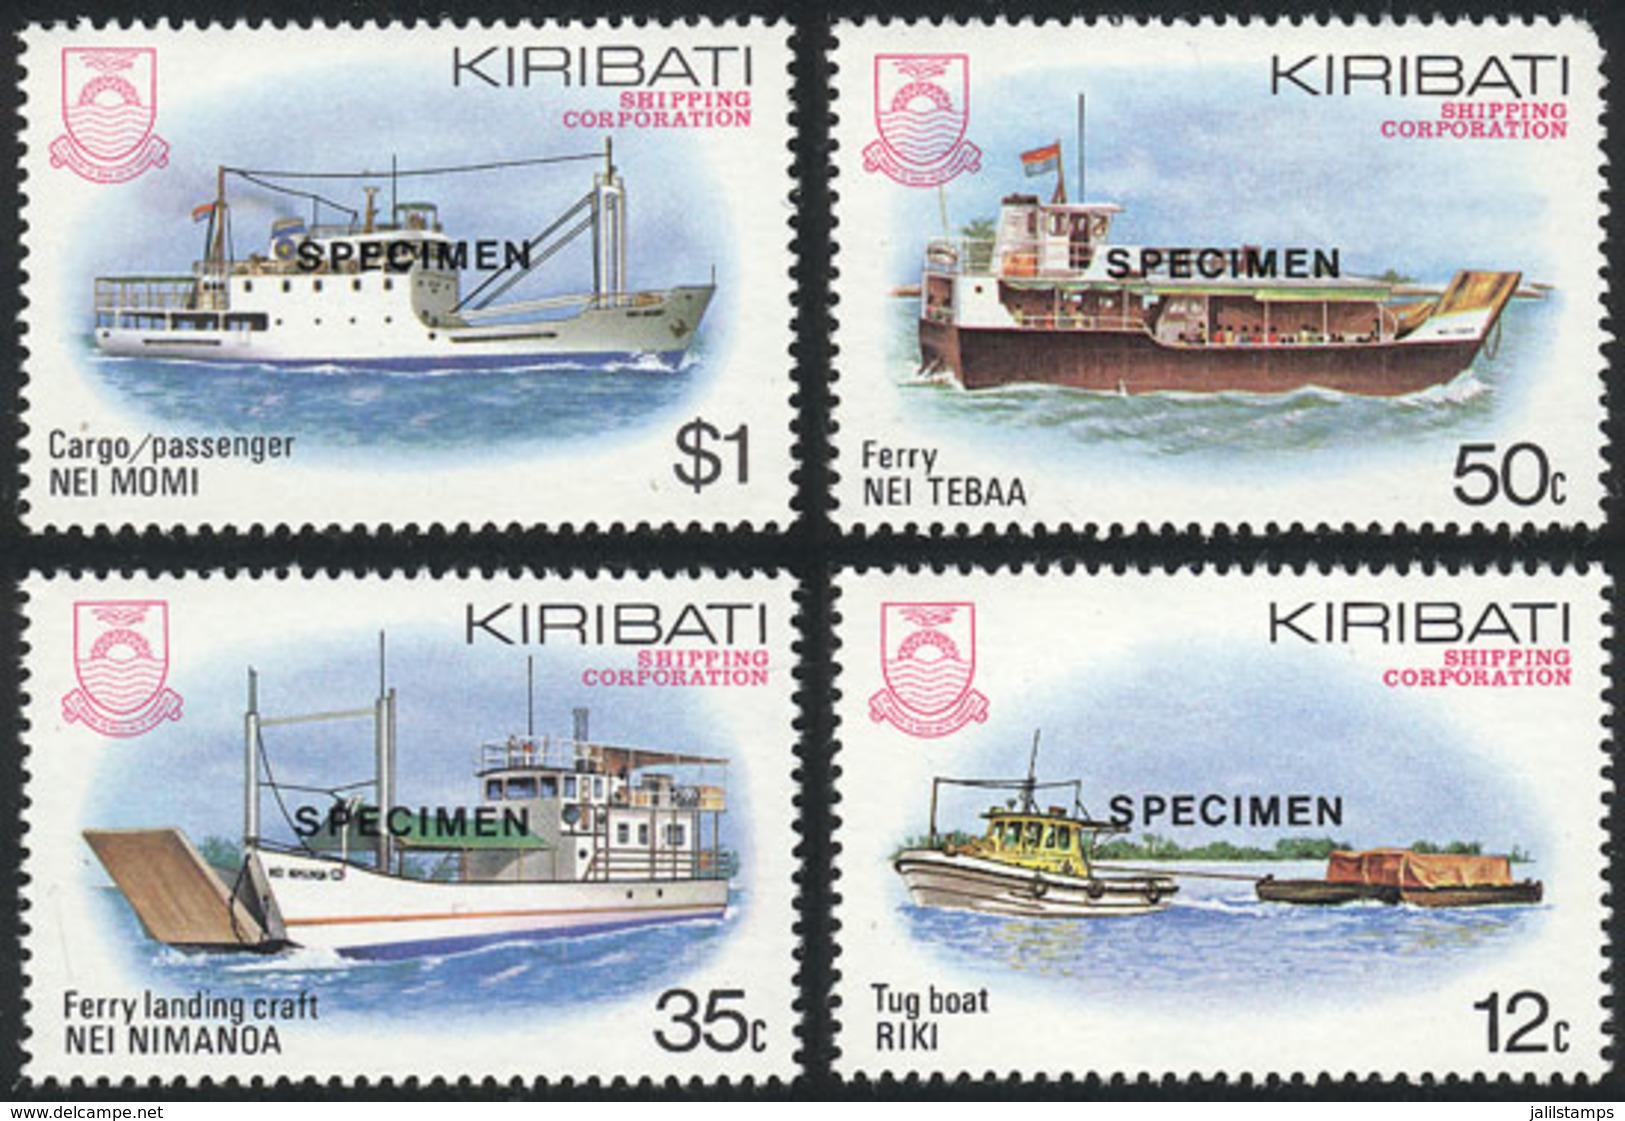 KIRIBATI: Sc.440/3, 1984 Ships, Cpl. Set Of 4 Values With SPECIMEN Overprint, Excellent Quality! - Kiribati (1979-...)